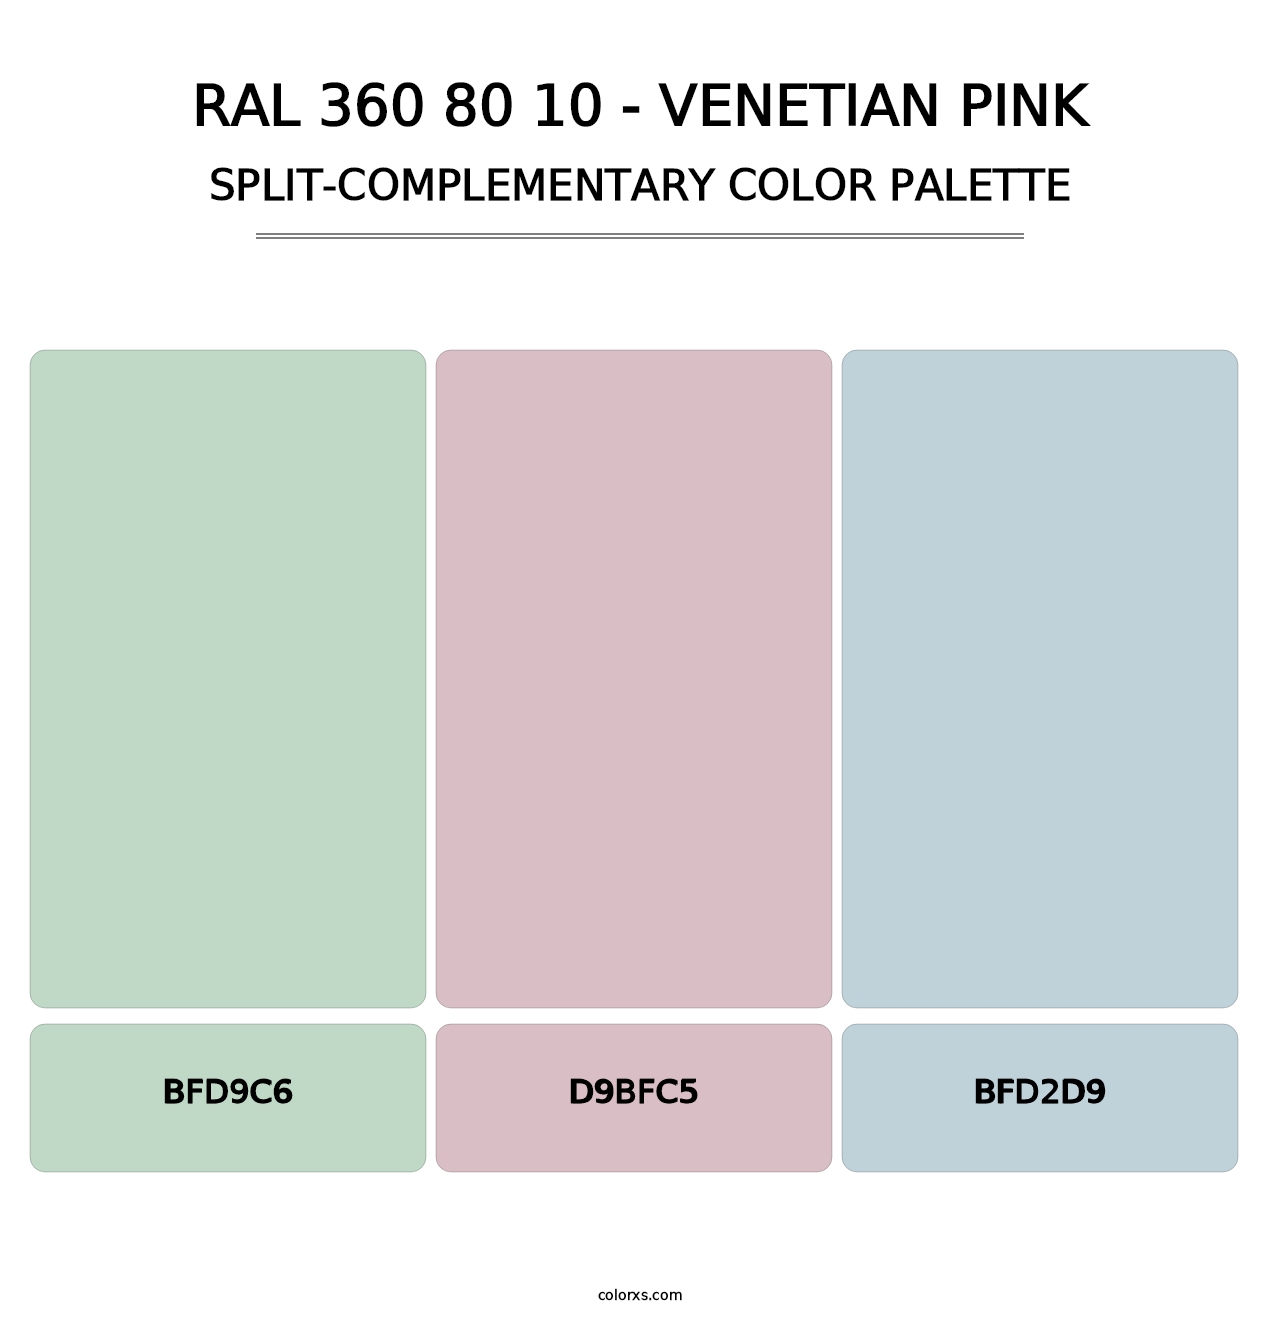 RAL 360 80 10 - Venetian Pink - Split-Complementary Color Palette